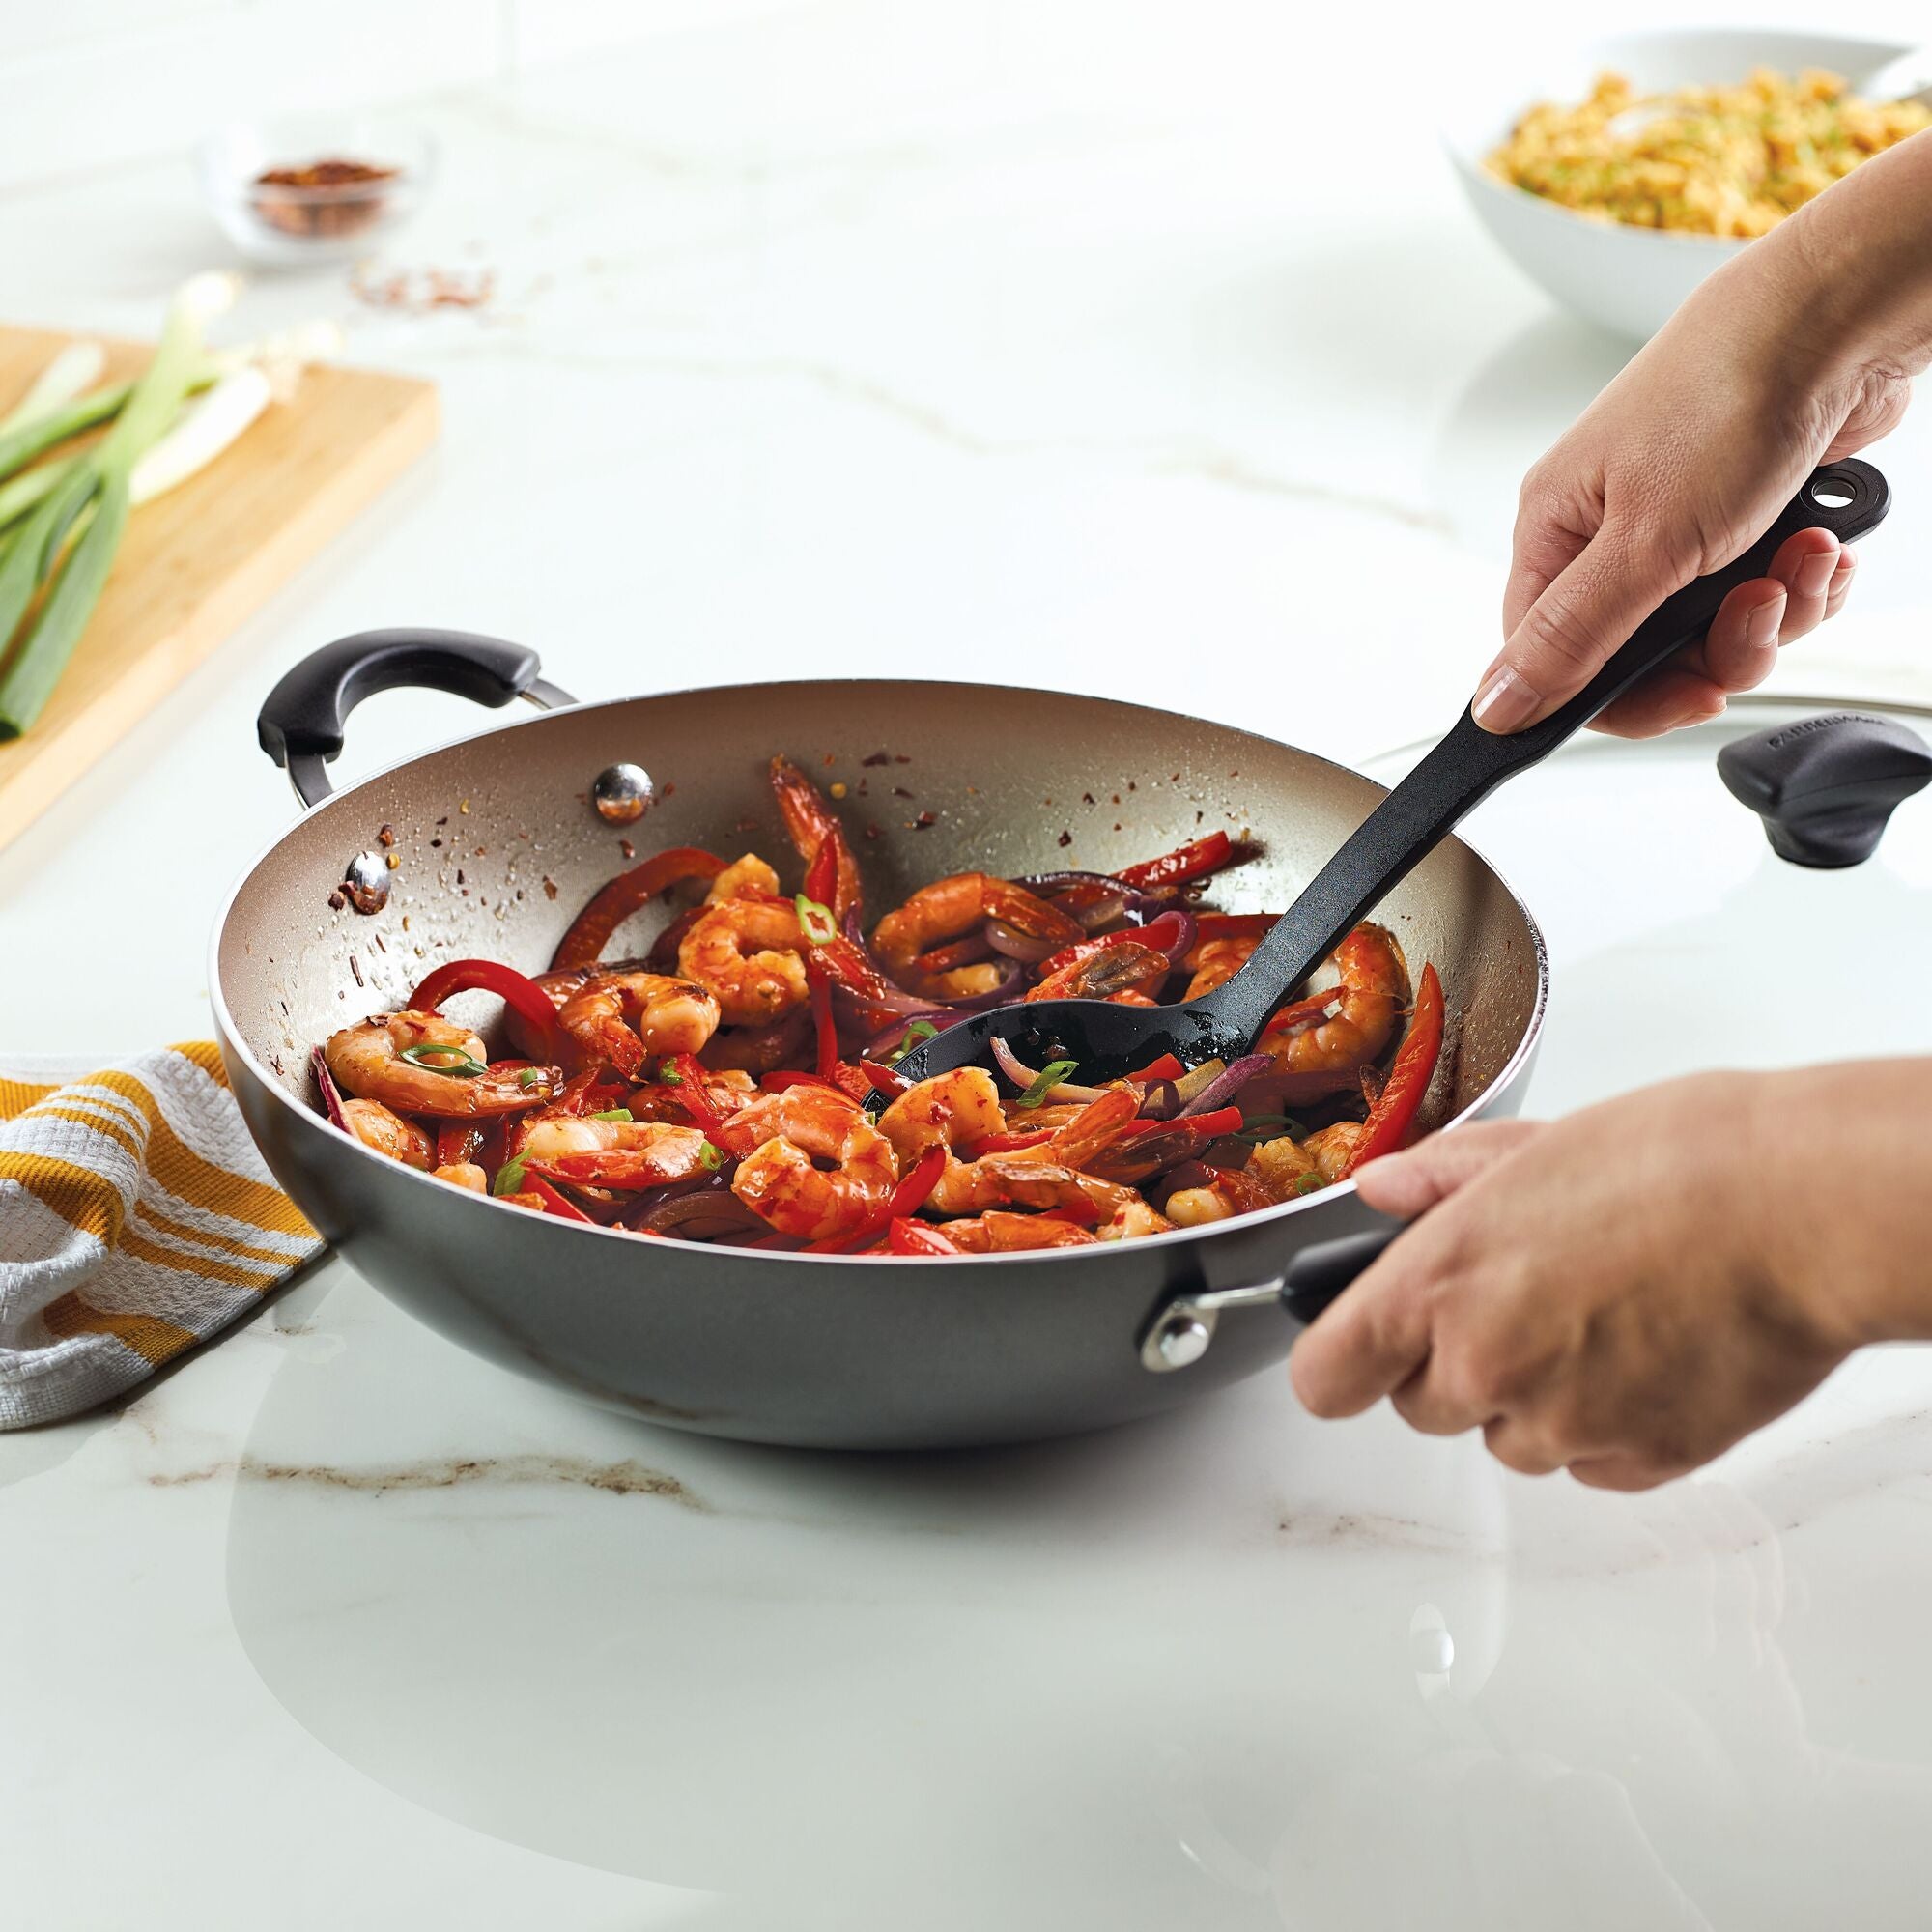 12-Inch Ultimate Stir Fry Pan – Anolon